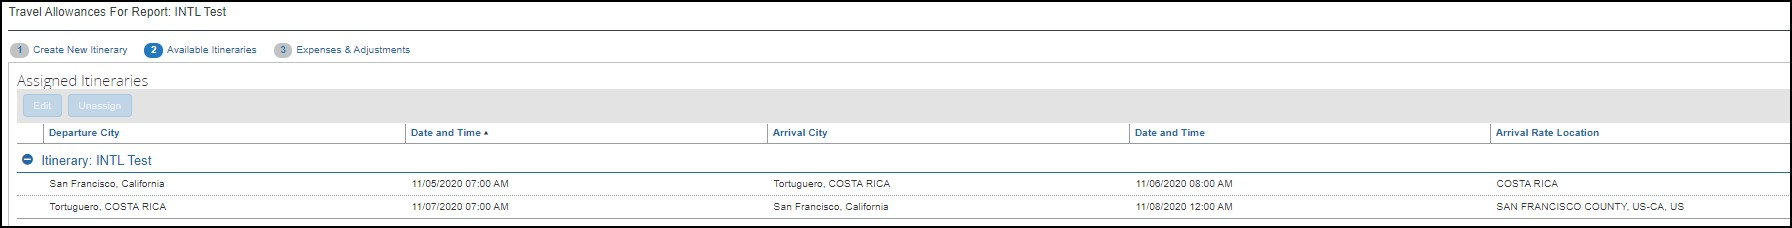 screenshot showing Available Itineraries tab